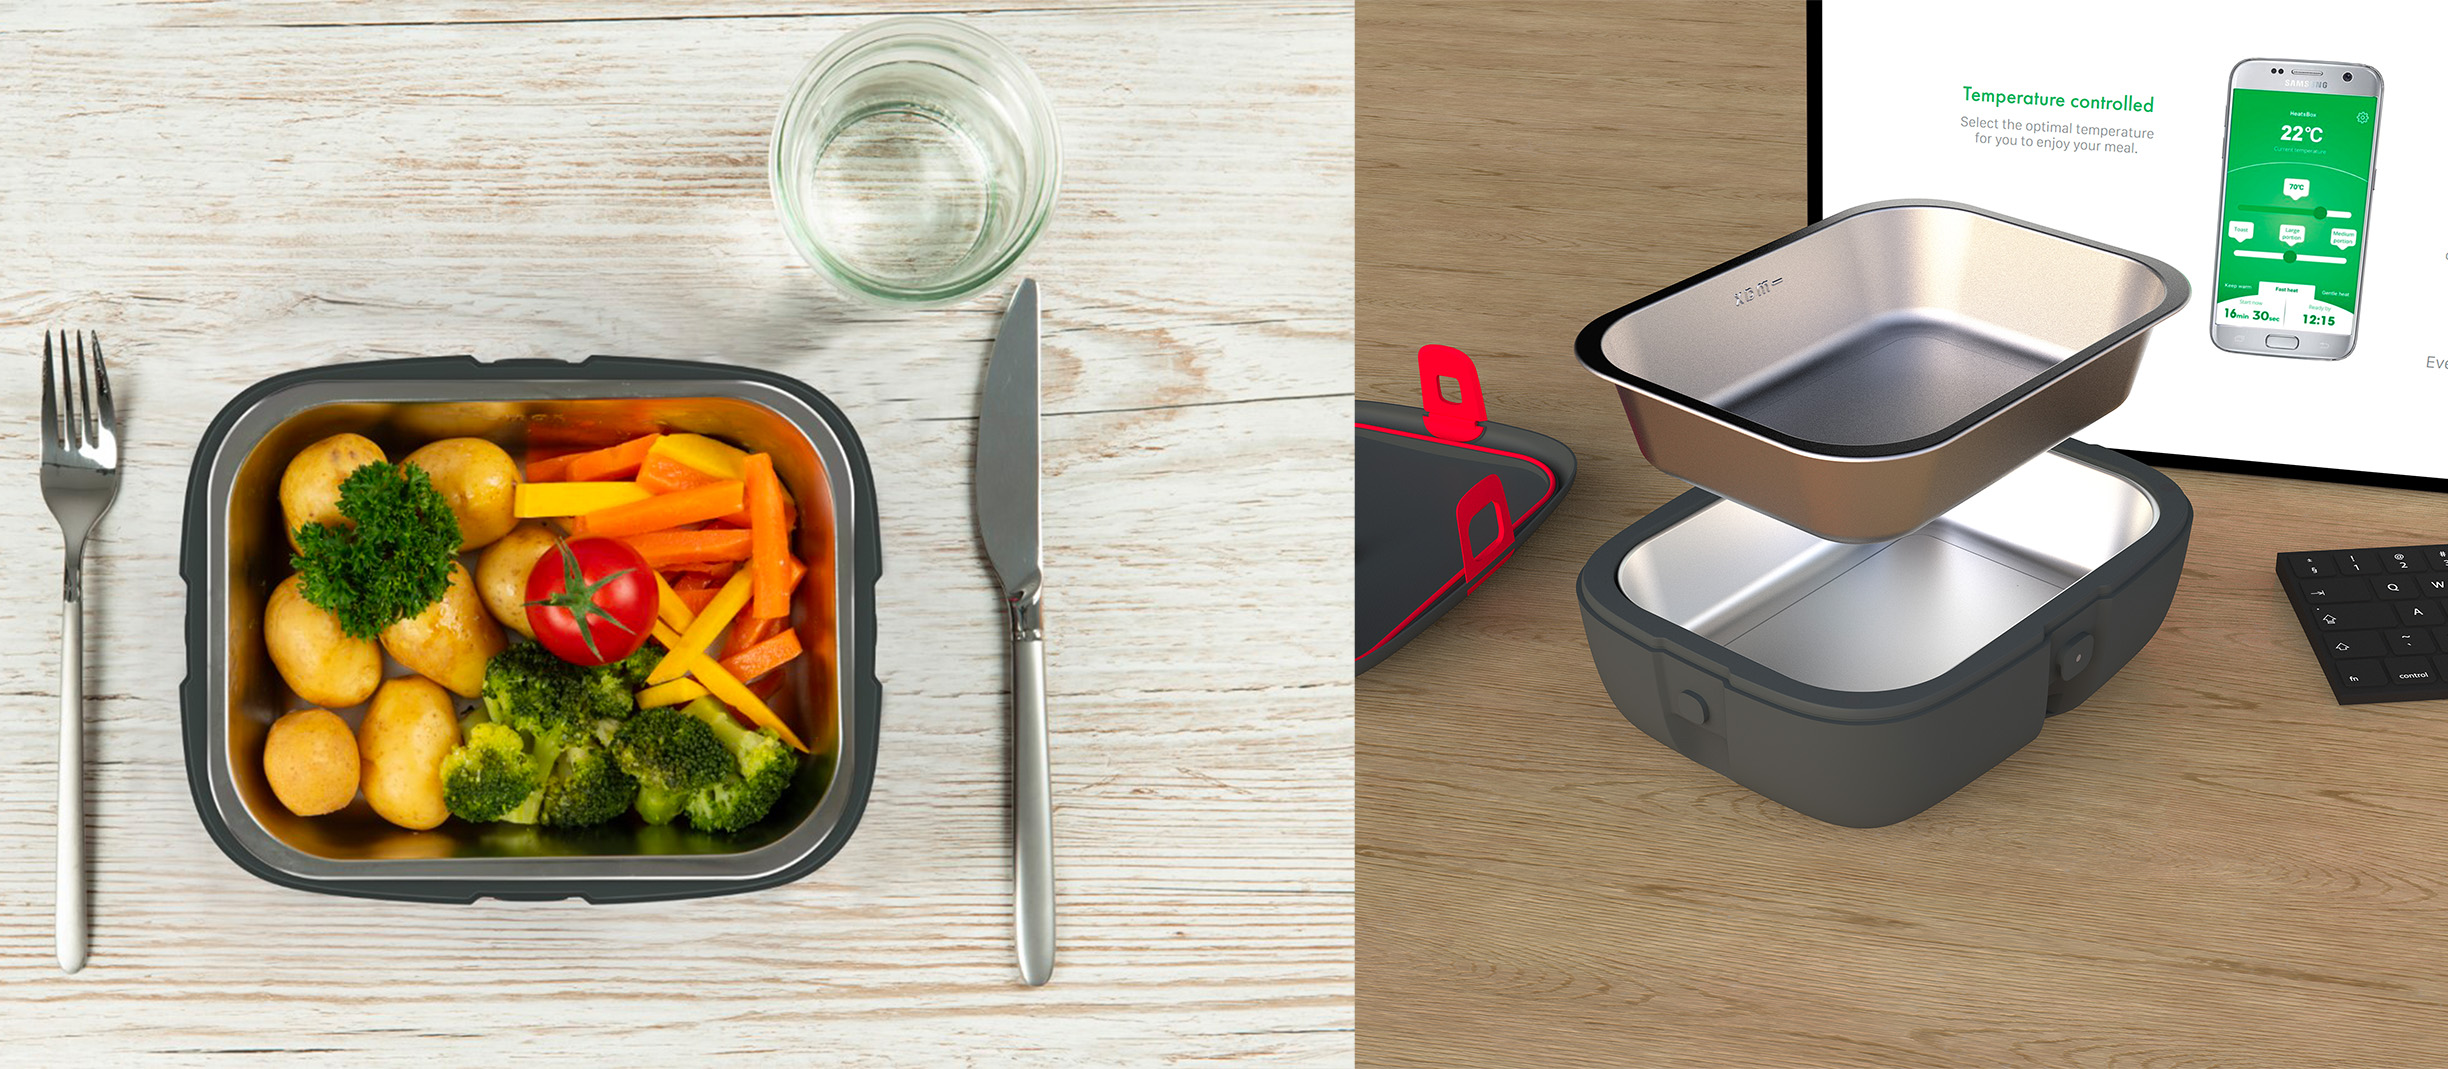 Heatbox: A Portable, Wireless, Smart, Self-Heating Lunchbox - IoT